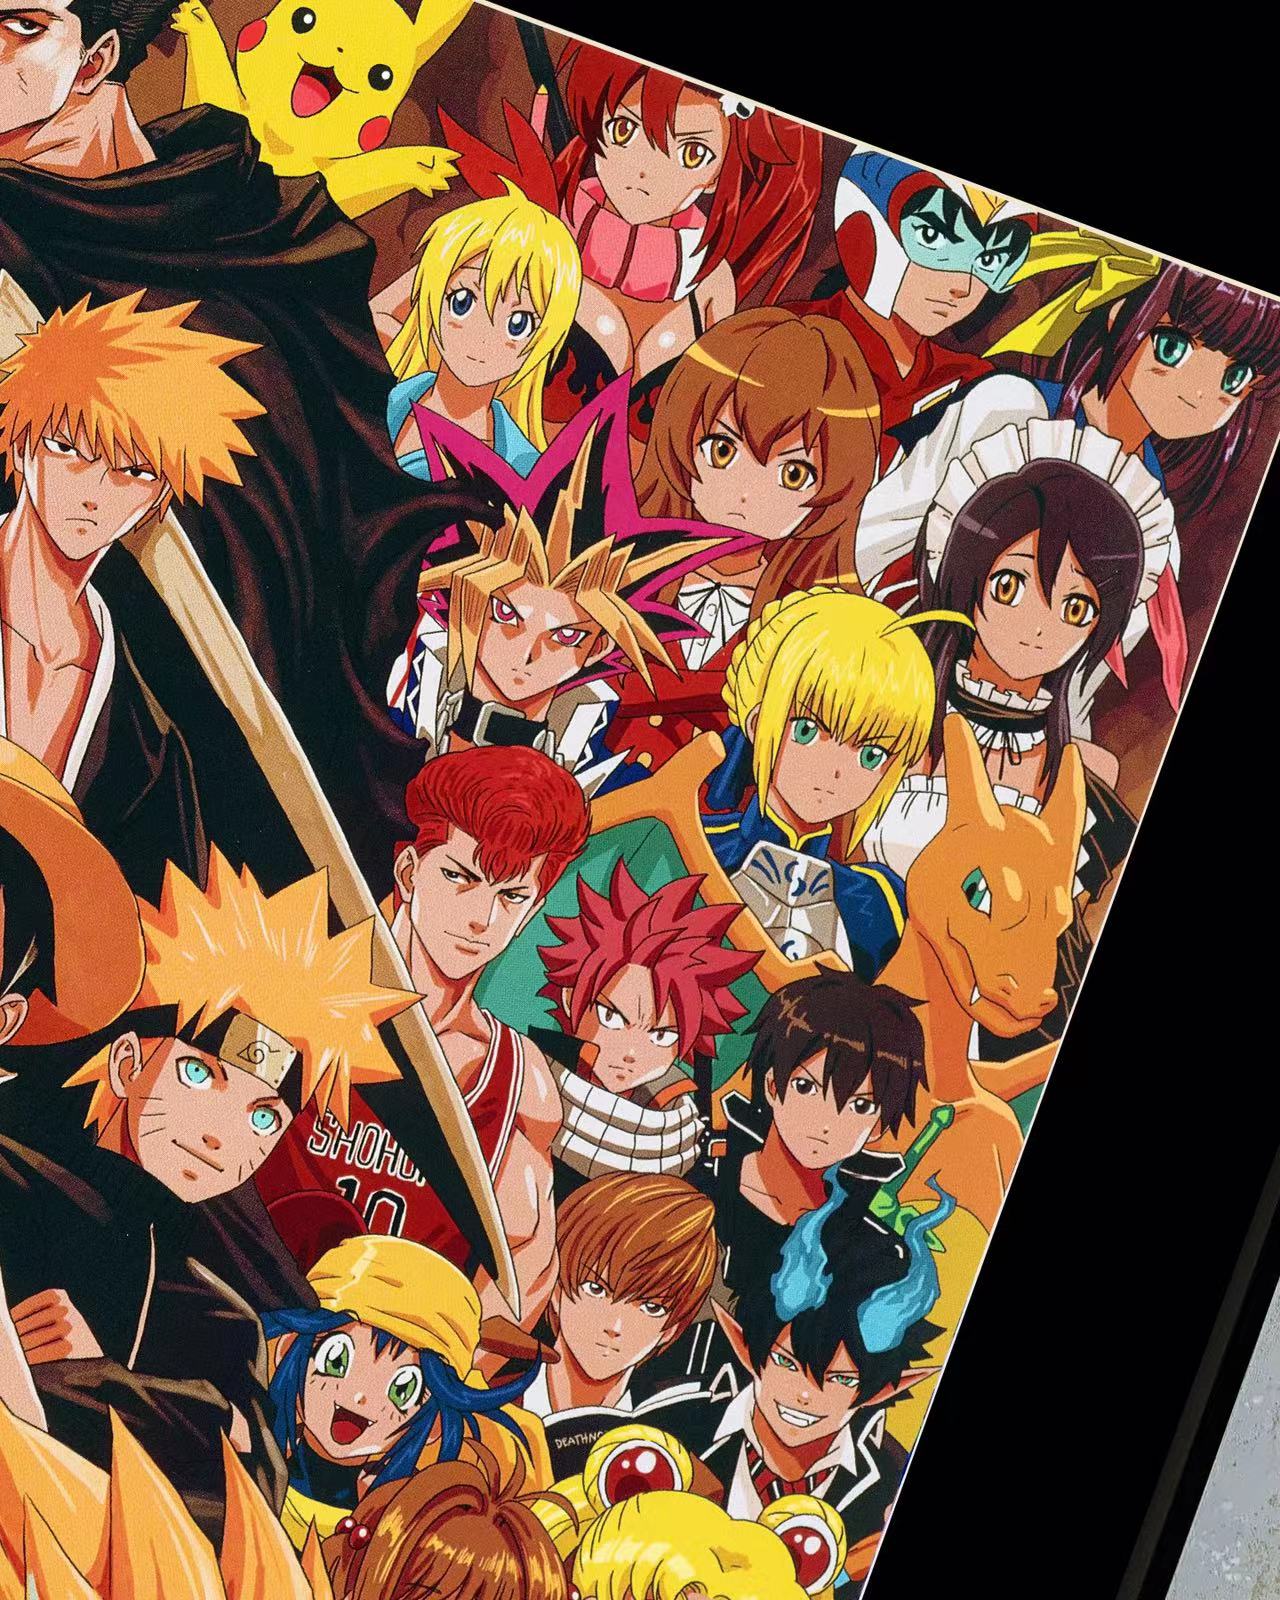 Shonen Kochou Shinobu Wallpaper, HD Anime 4K Wallpapers, Images and  Background - Wallpapers Den